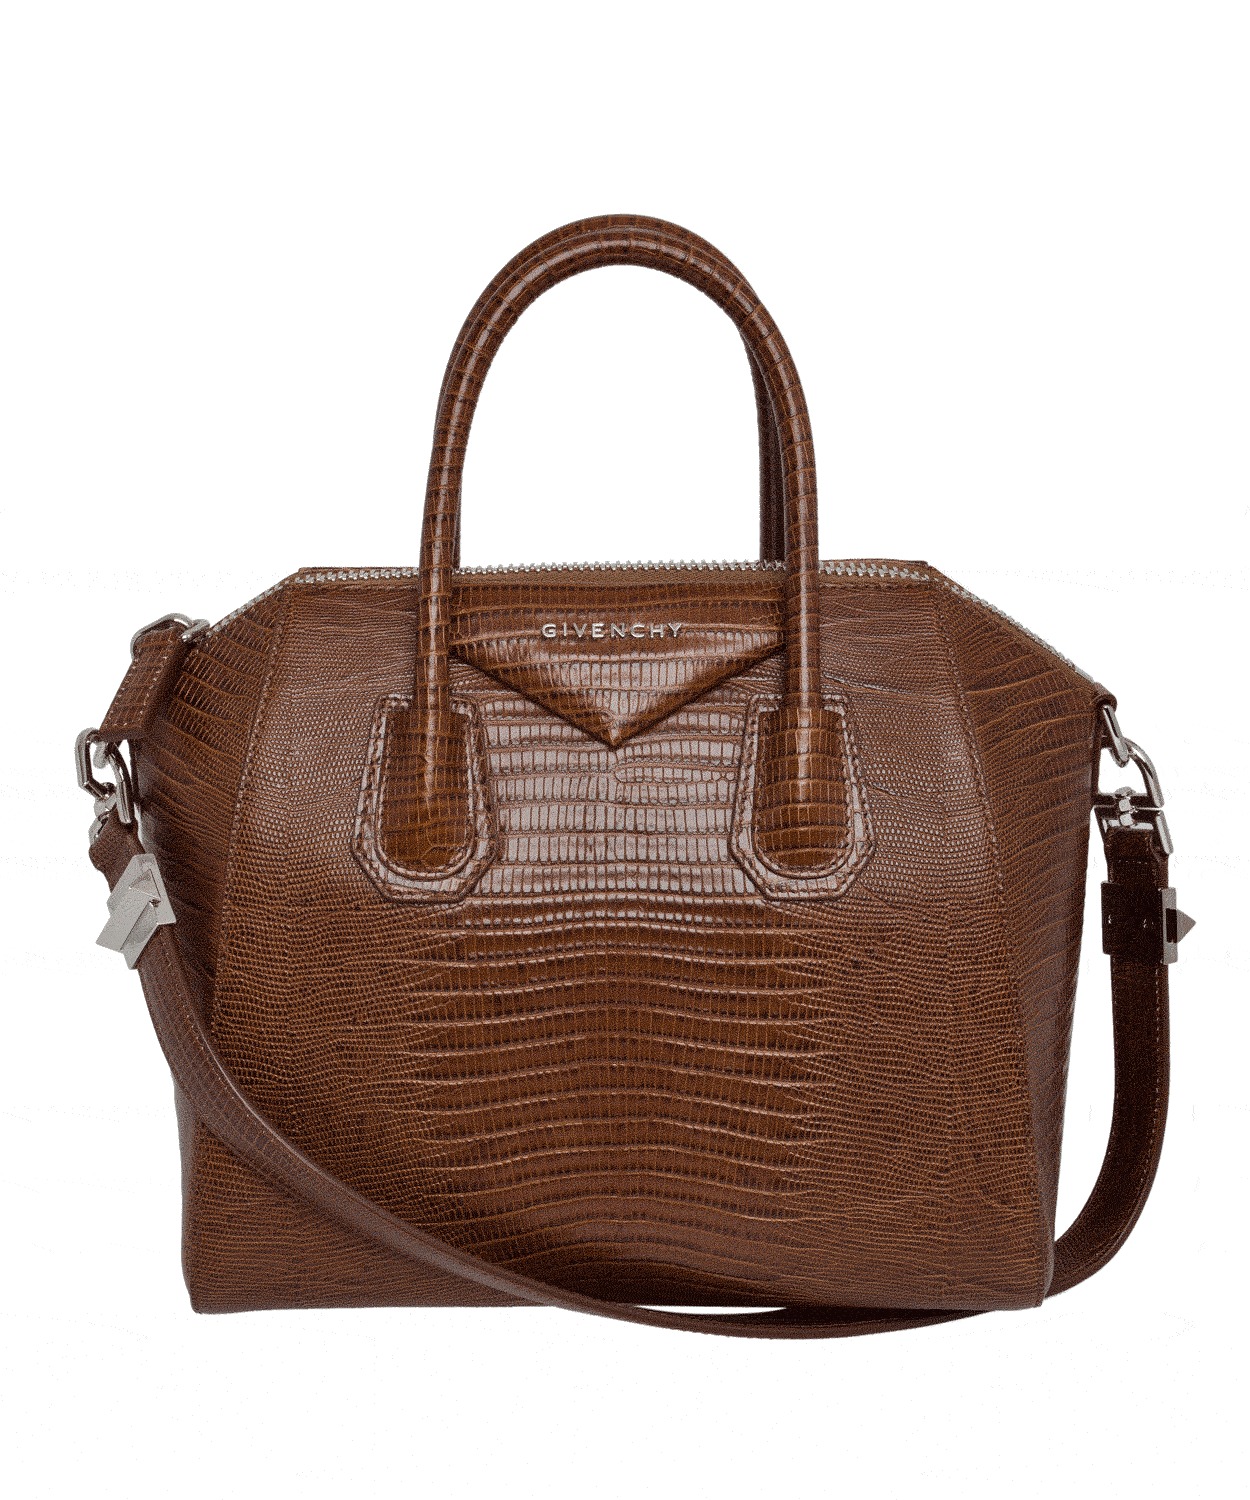 Lyst - Givenchy Tan Antigona Medium Croc Embossed Leather Tote Bag in Brown